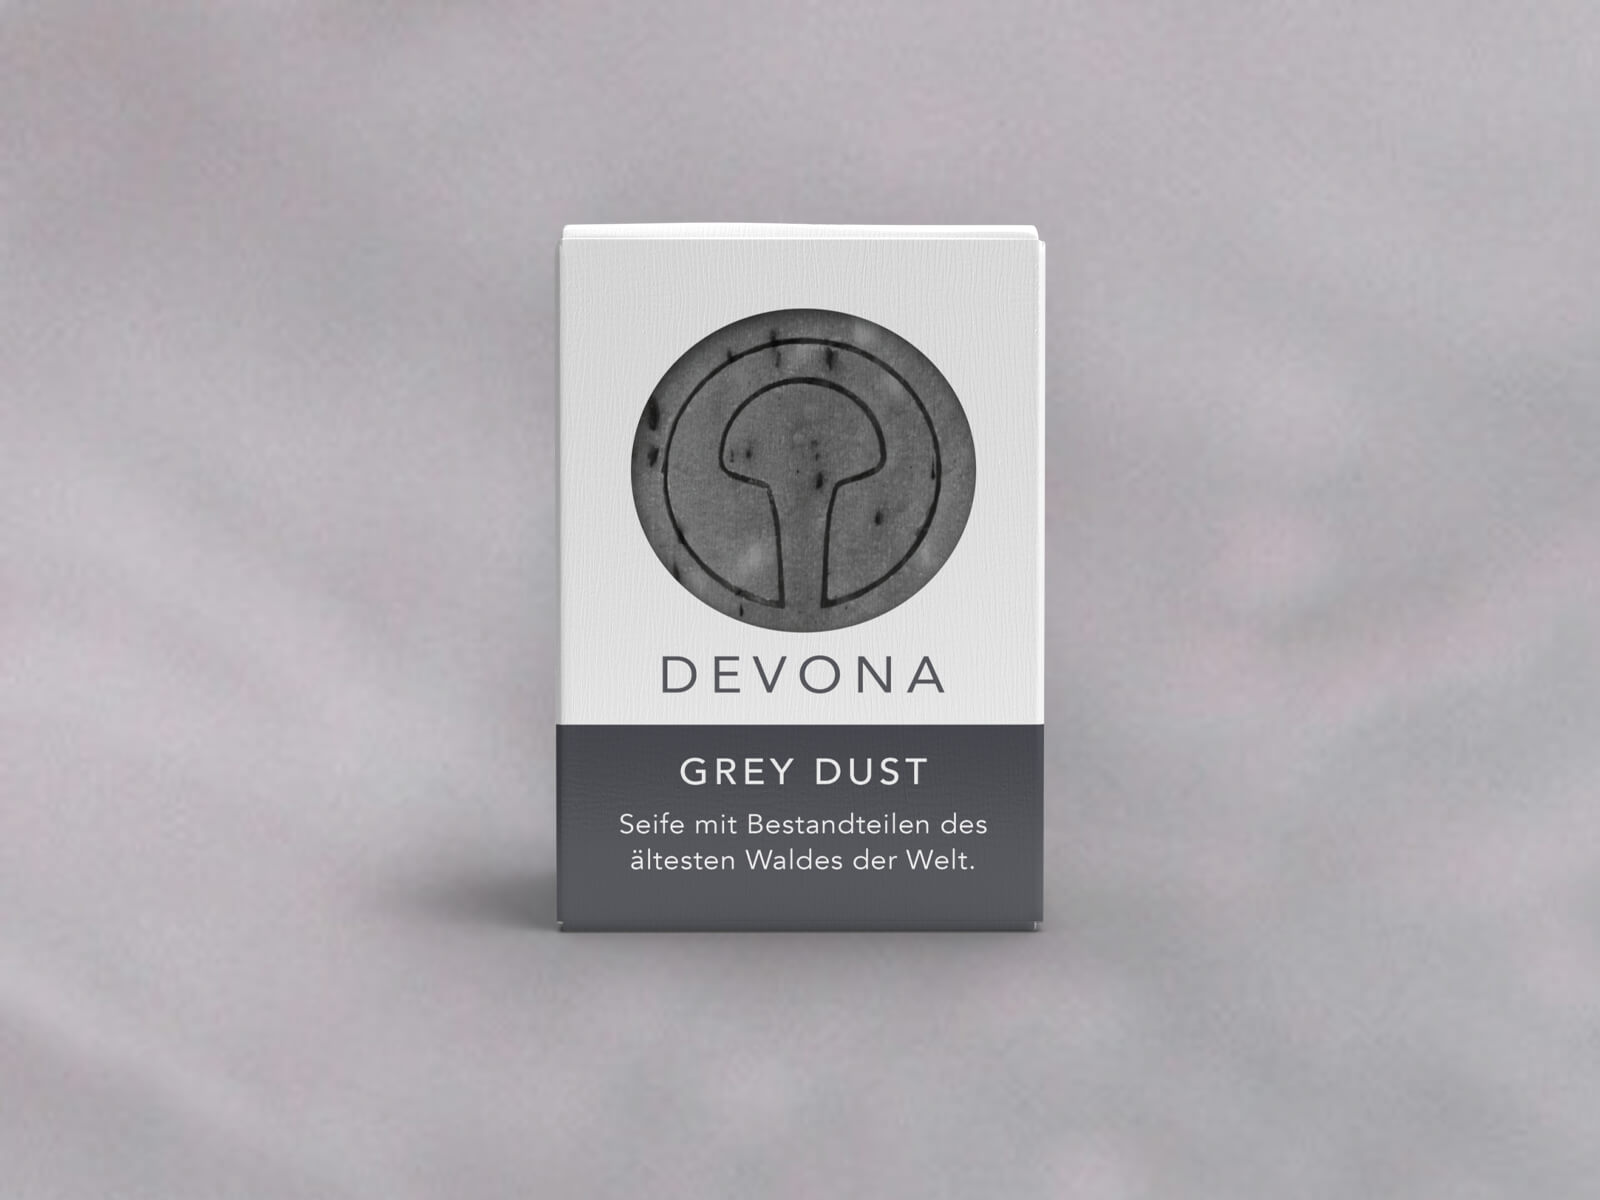 devona-grey-dust-seife-freisteller-stage-bearb.jpg